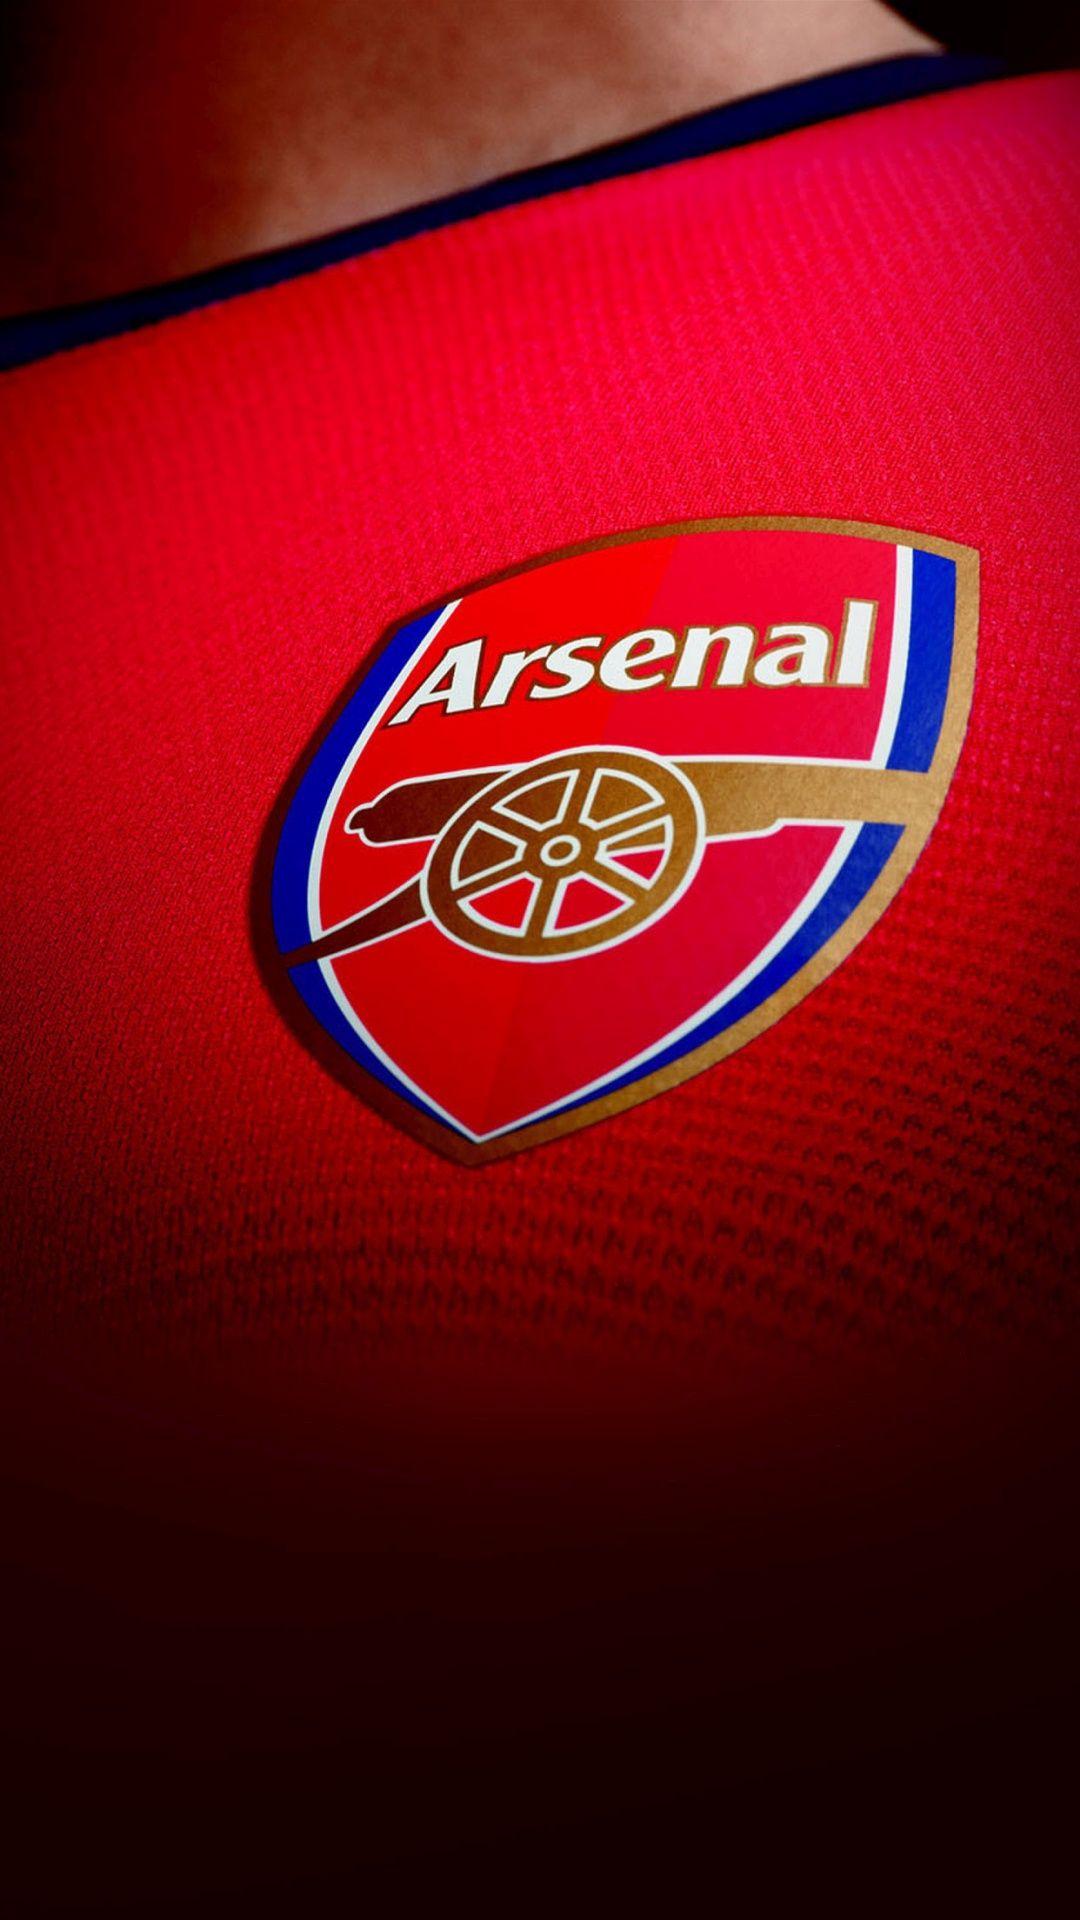 Wallpaper.wiki Arsenal Football Team Logo England Soccer IPhone